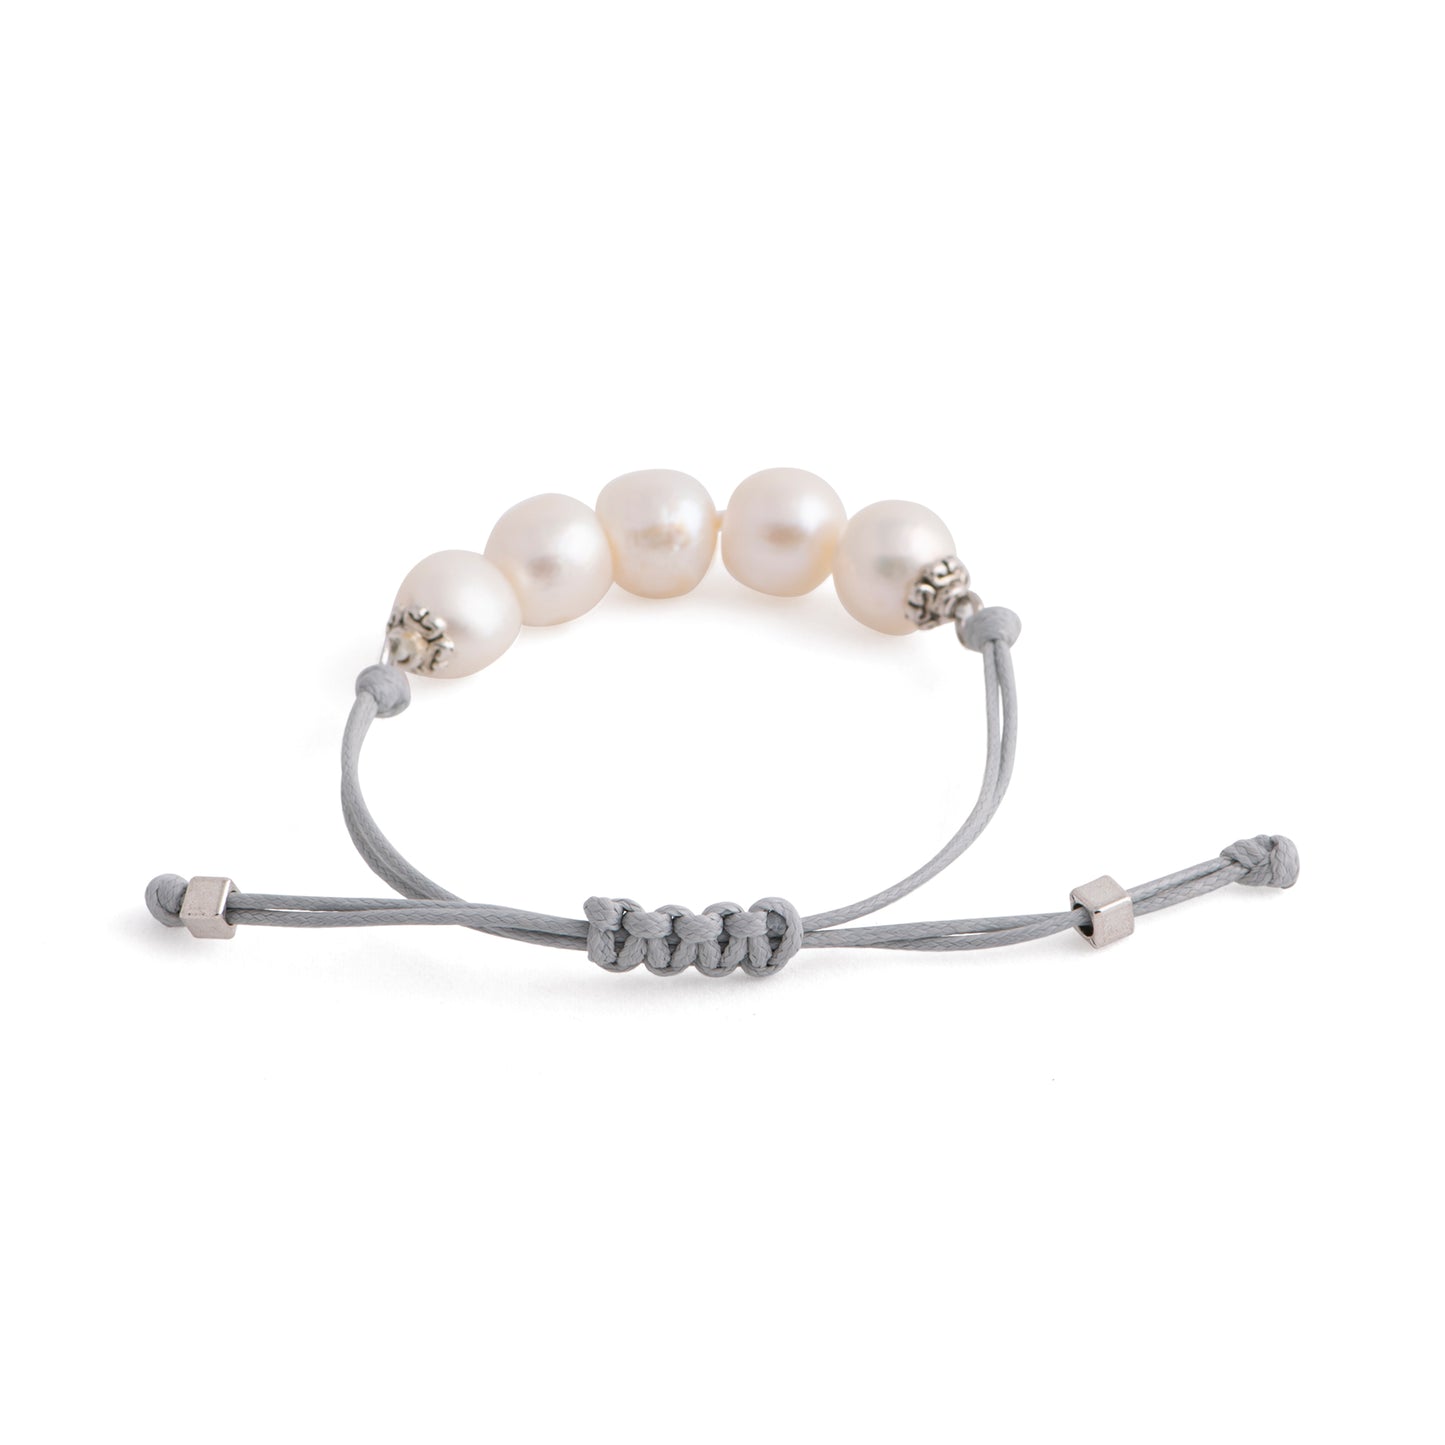 Aegean - Five freshwater pearl adjustable string bracelet (Grey strand, clasp)